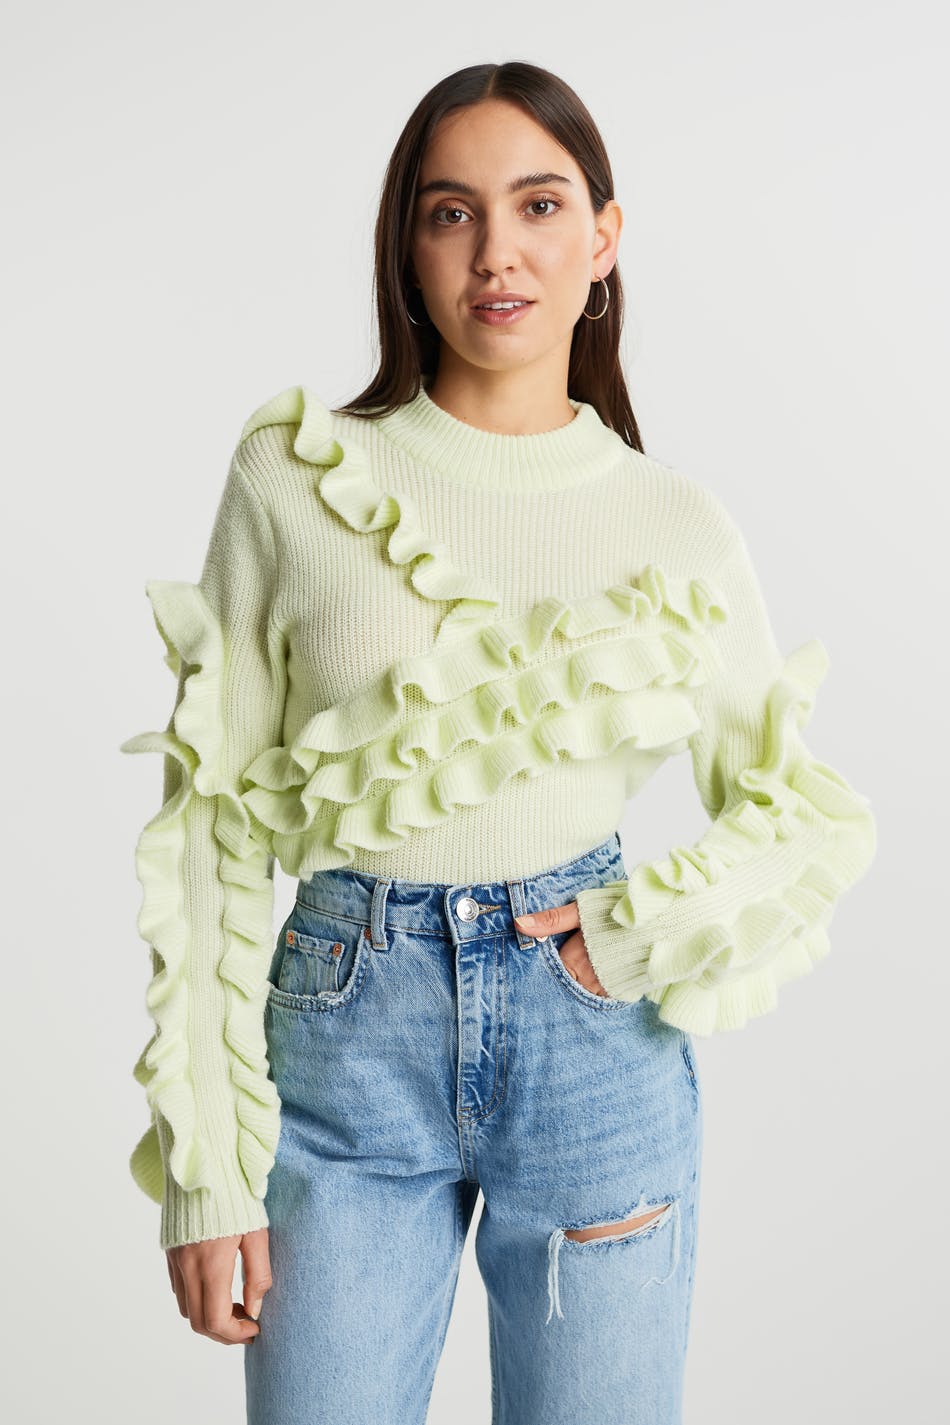 Adalynn knitted sweater